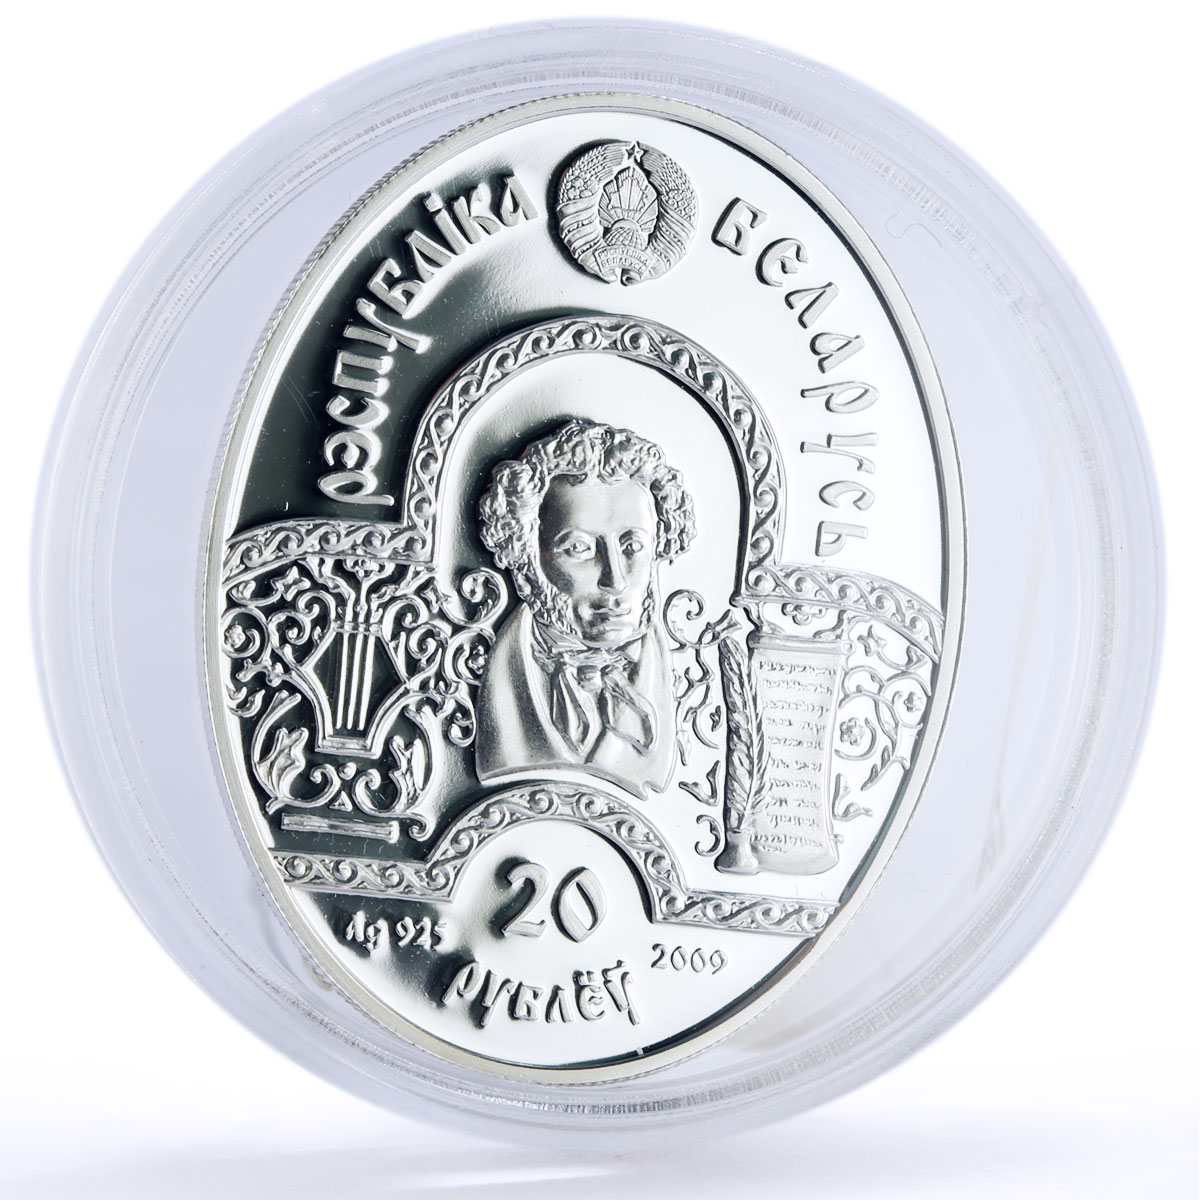 Belarus 20 rubles Pushkin Golden Cockerel Tale Literature colored Ag coin 2009